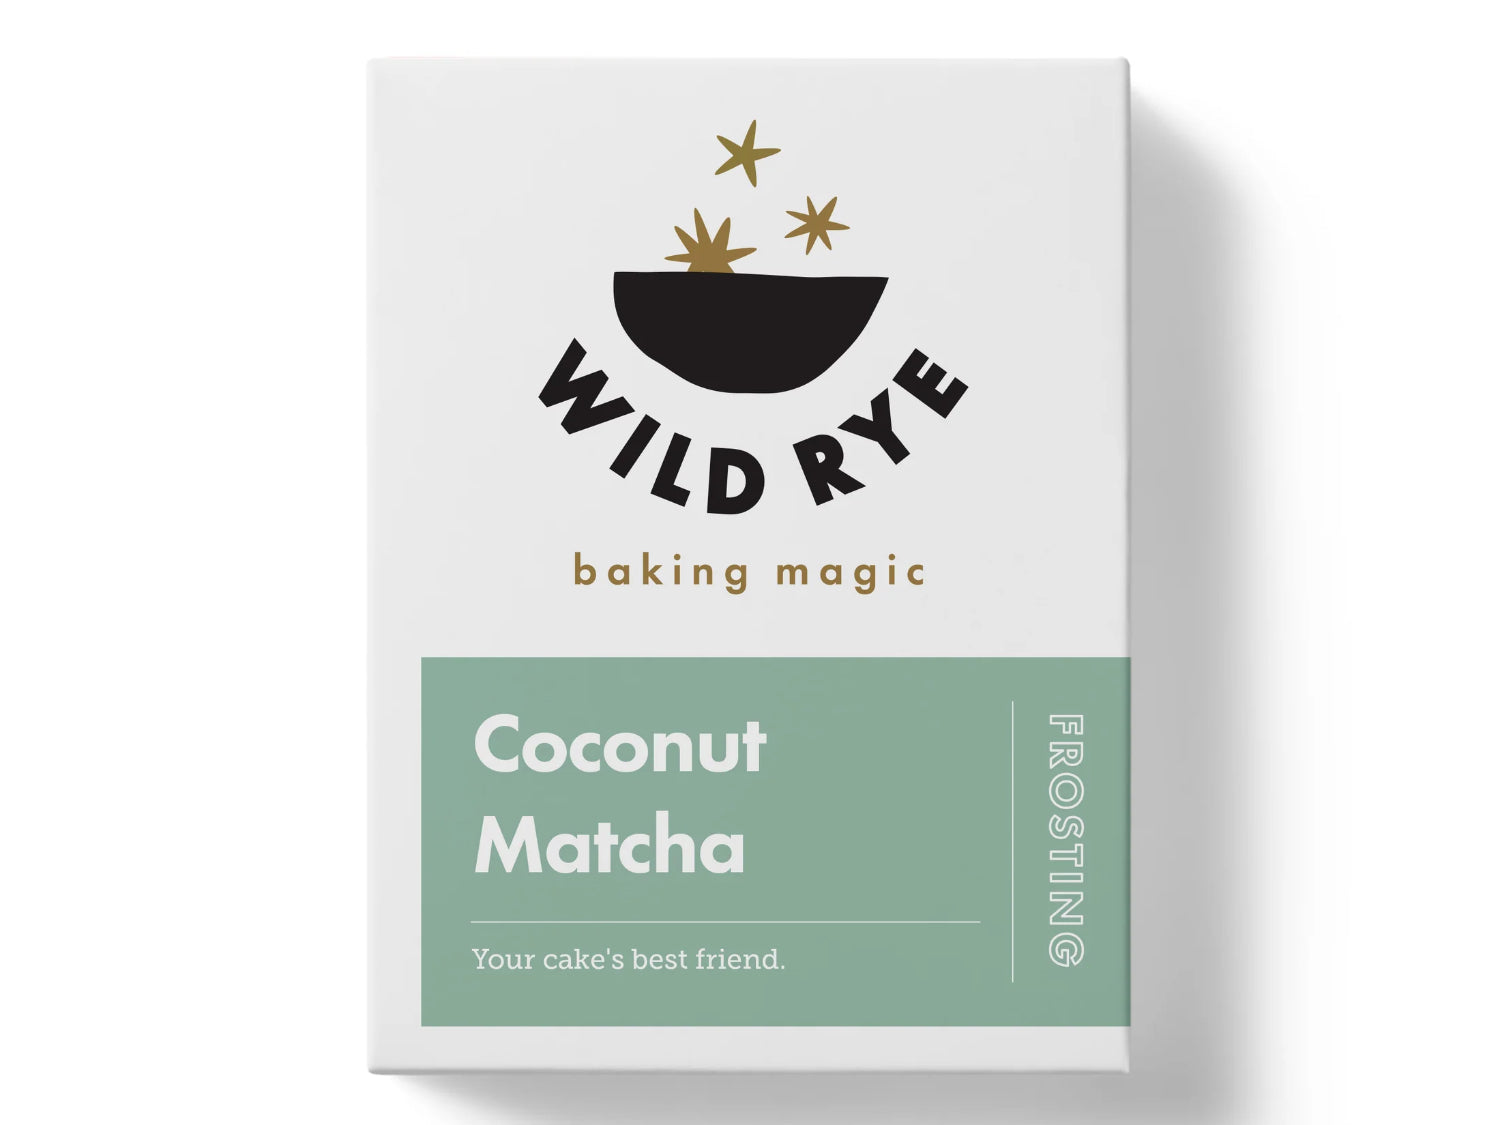 Cardboard packaging example from brand Wild Rye Baking